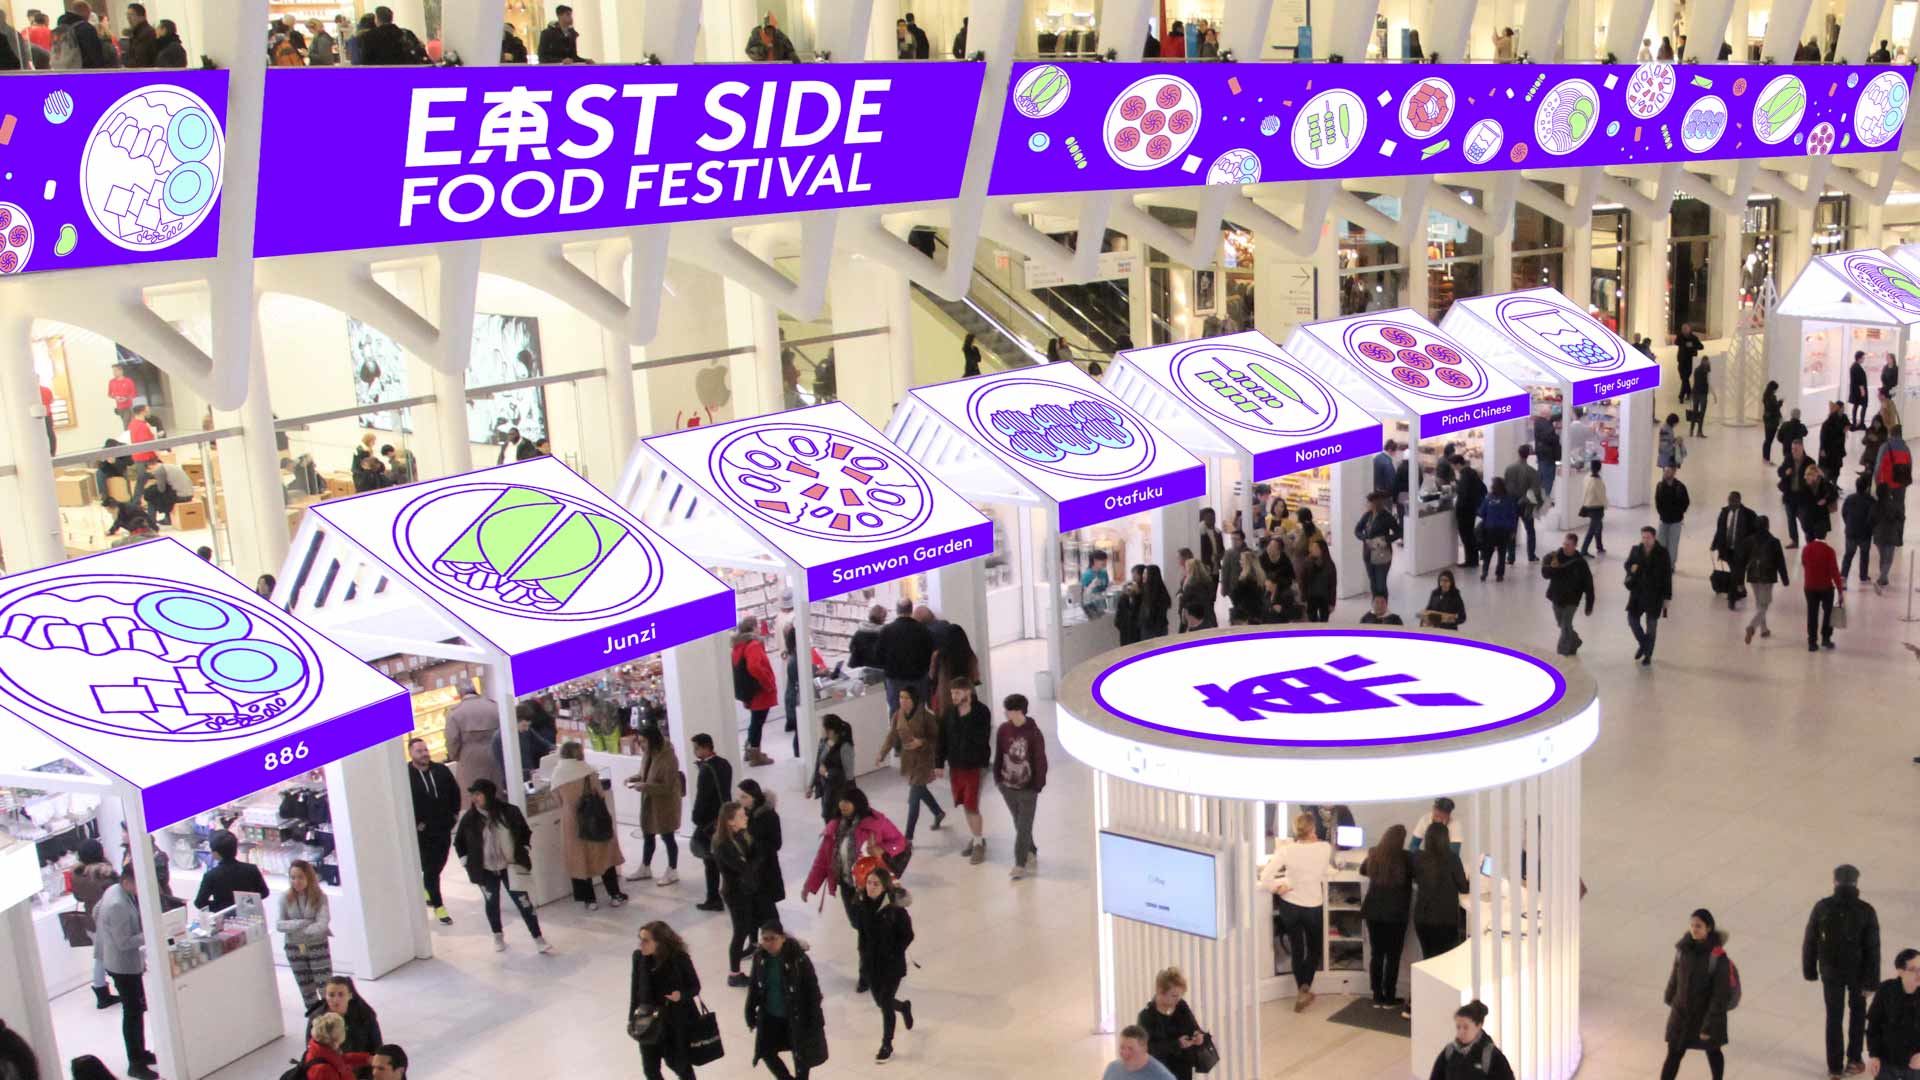 East Side Food Festival event branding